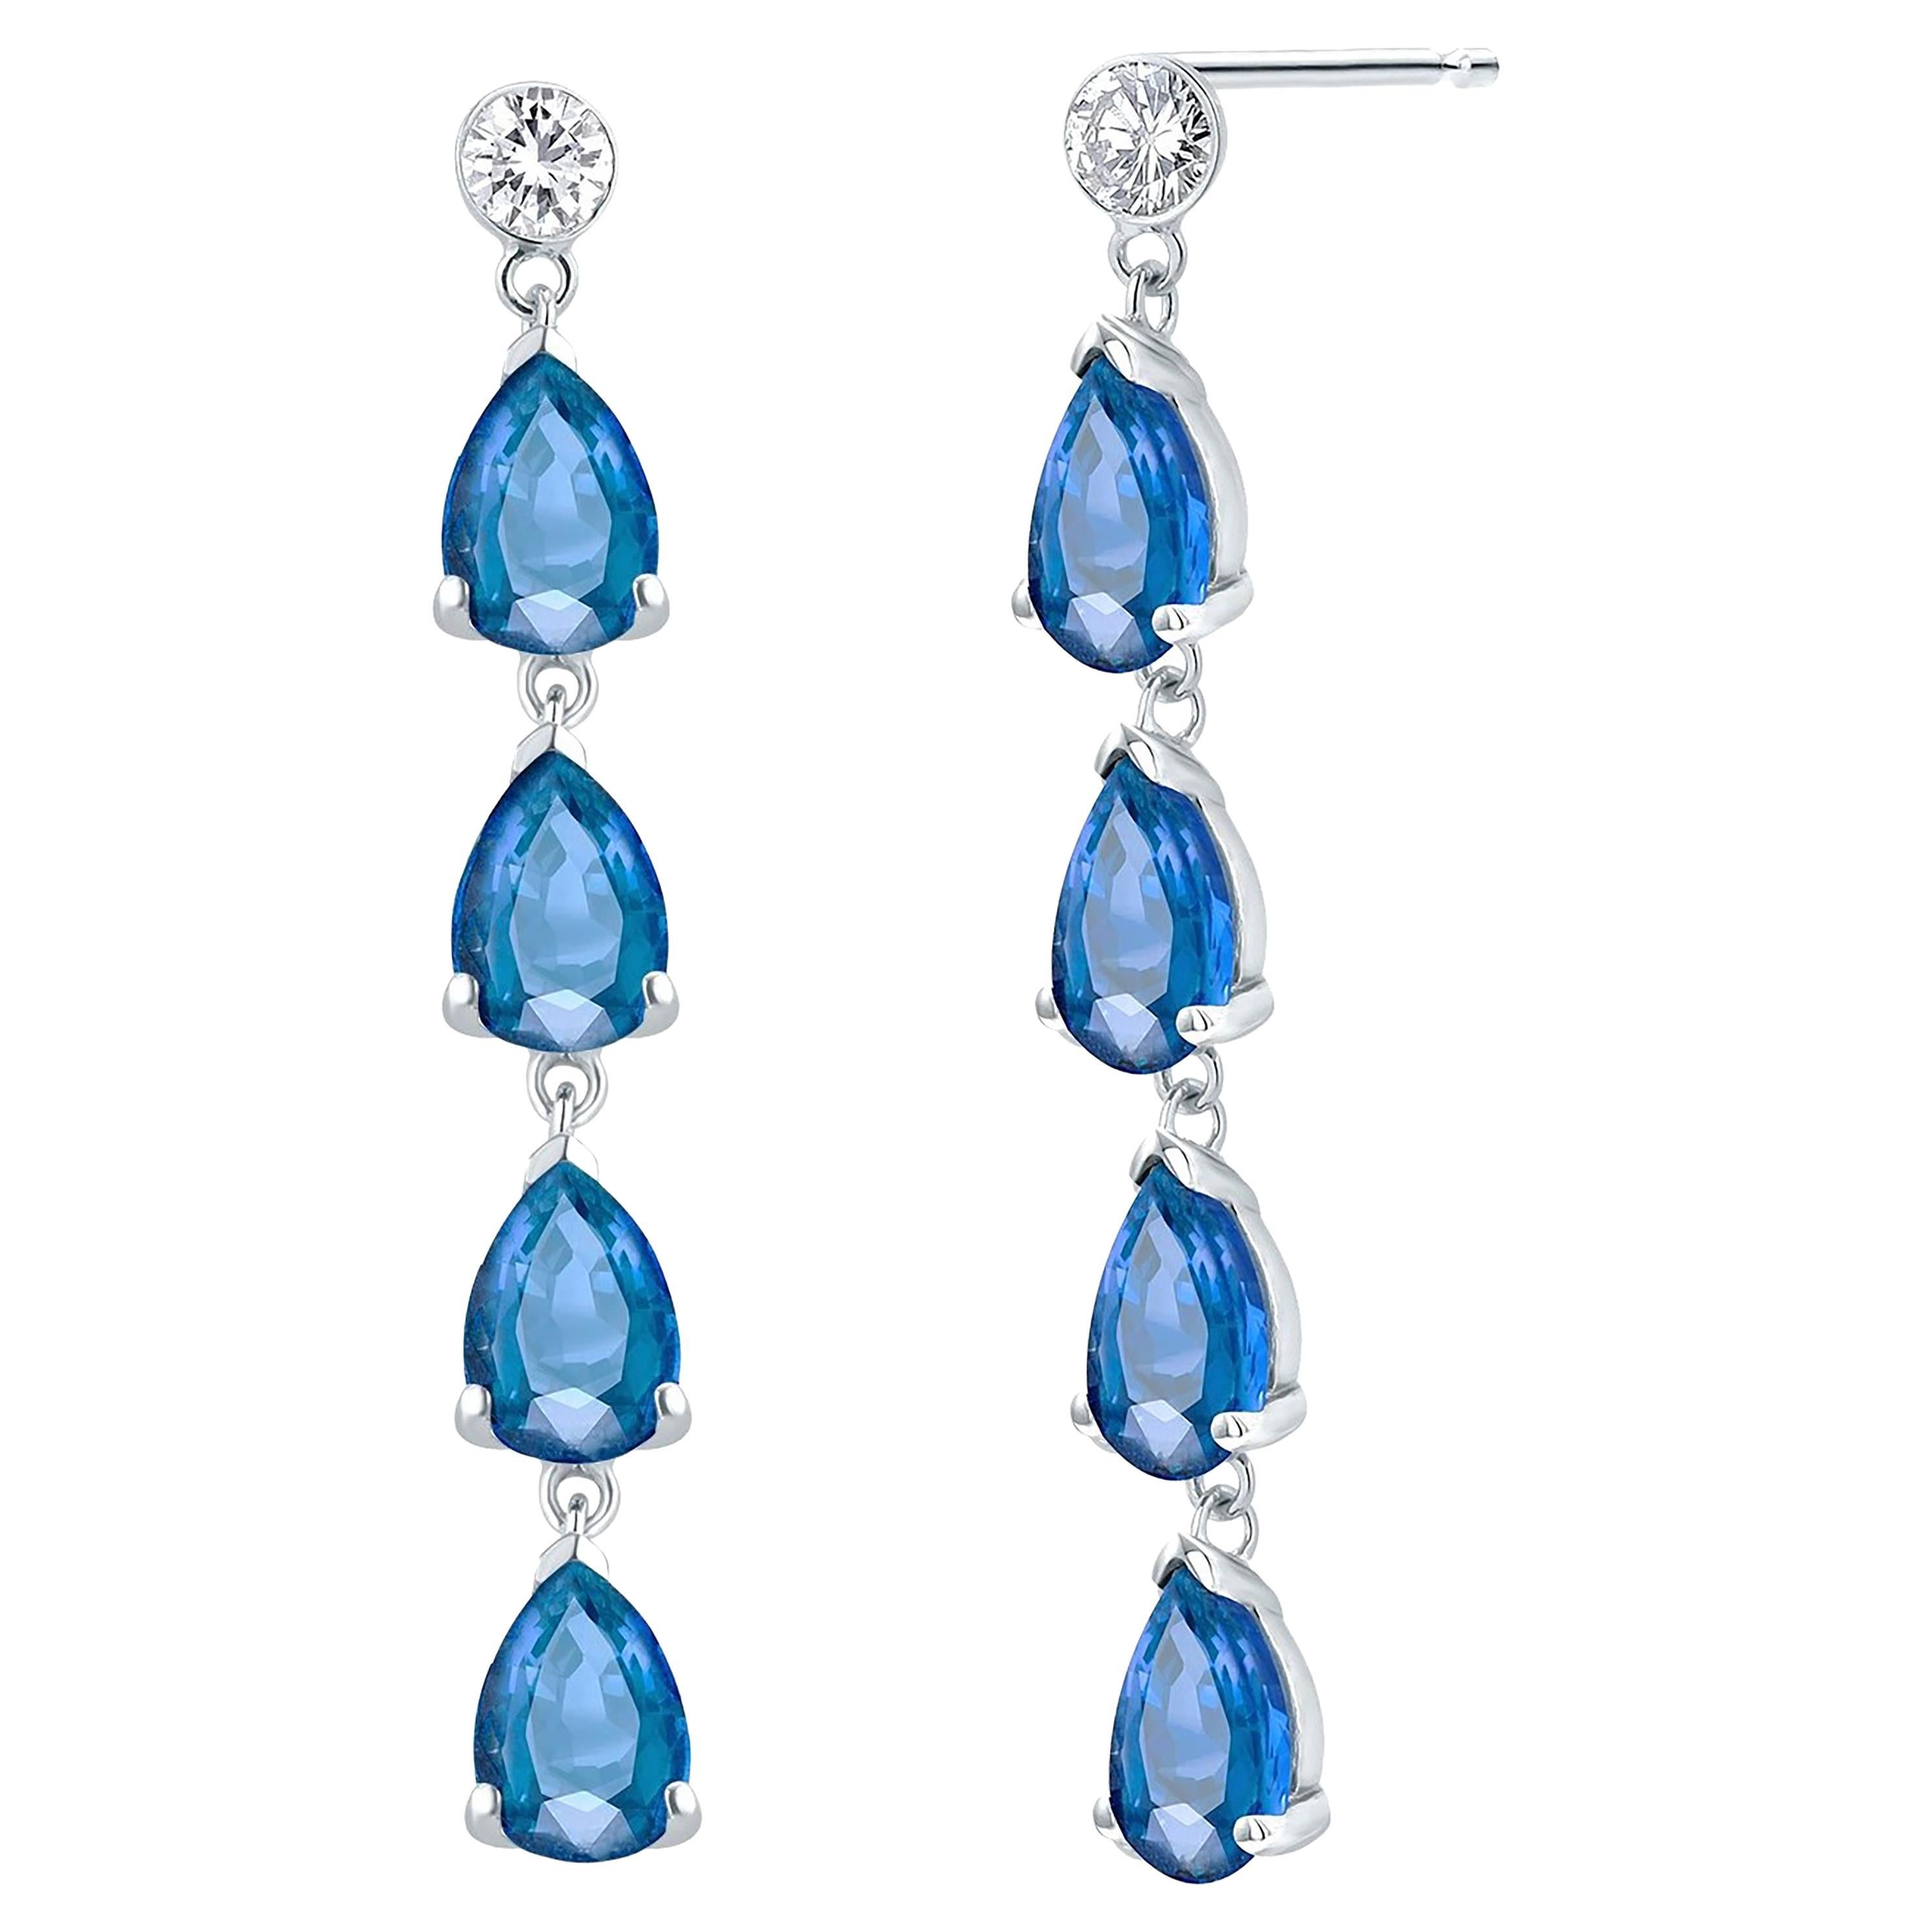 Ten Pear Sapphire Diamond 6.00 Carat 1.75 Inch Long Dangle White Gold Earrings